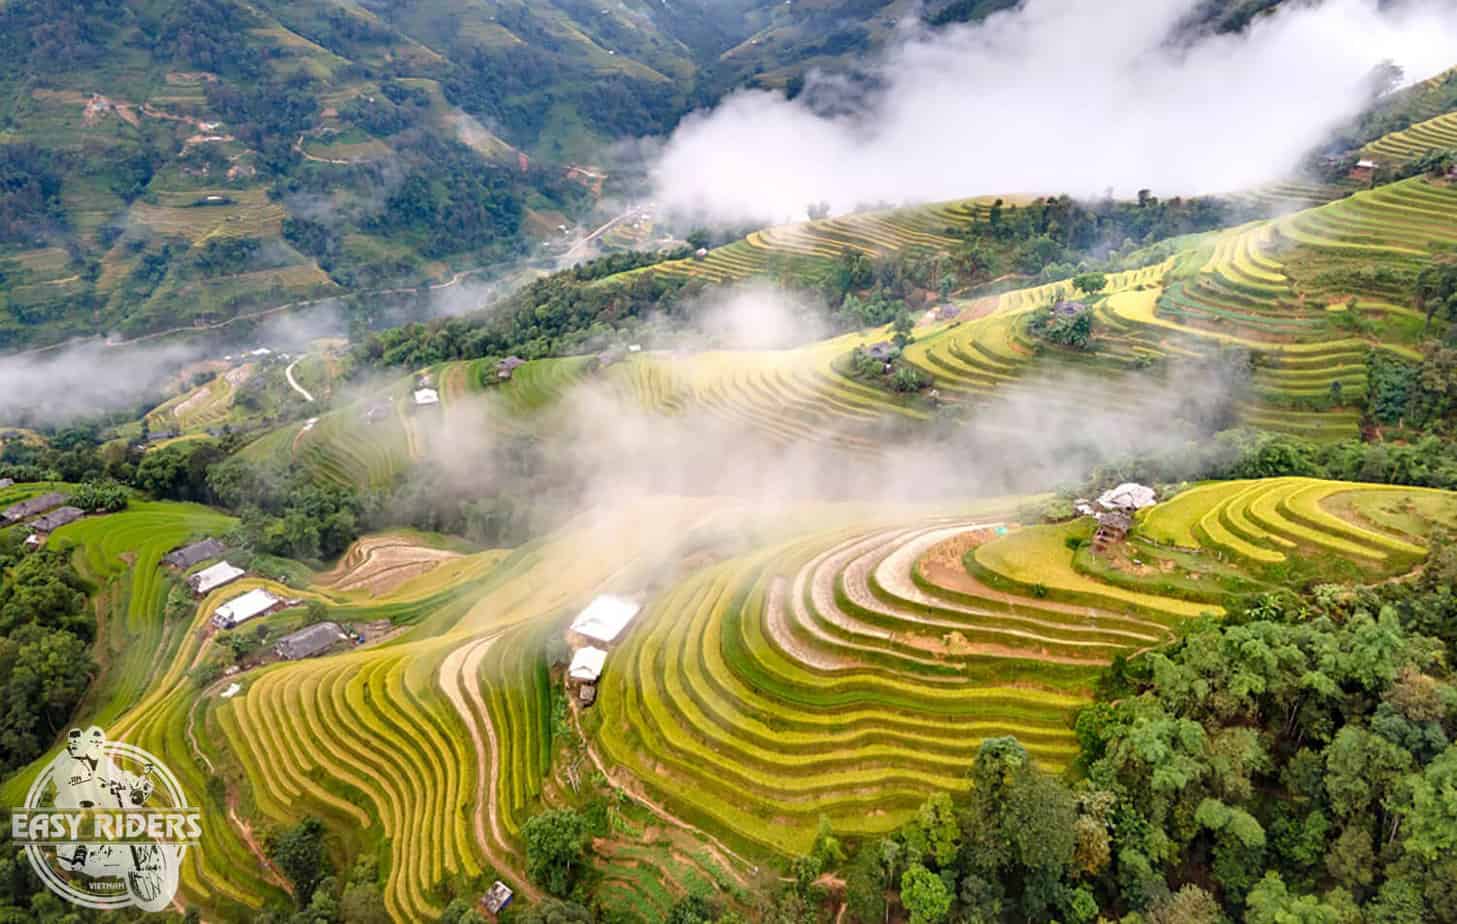 Beautiful rice fields in Vietnam - Hoang Su Phi